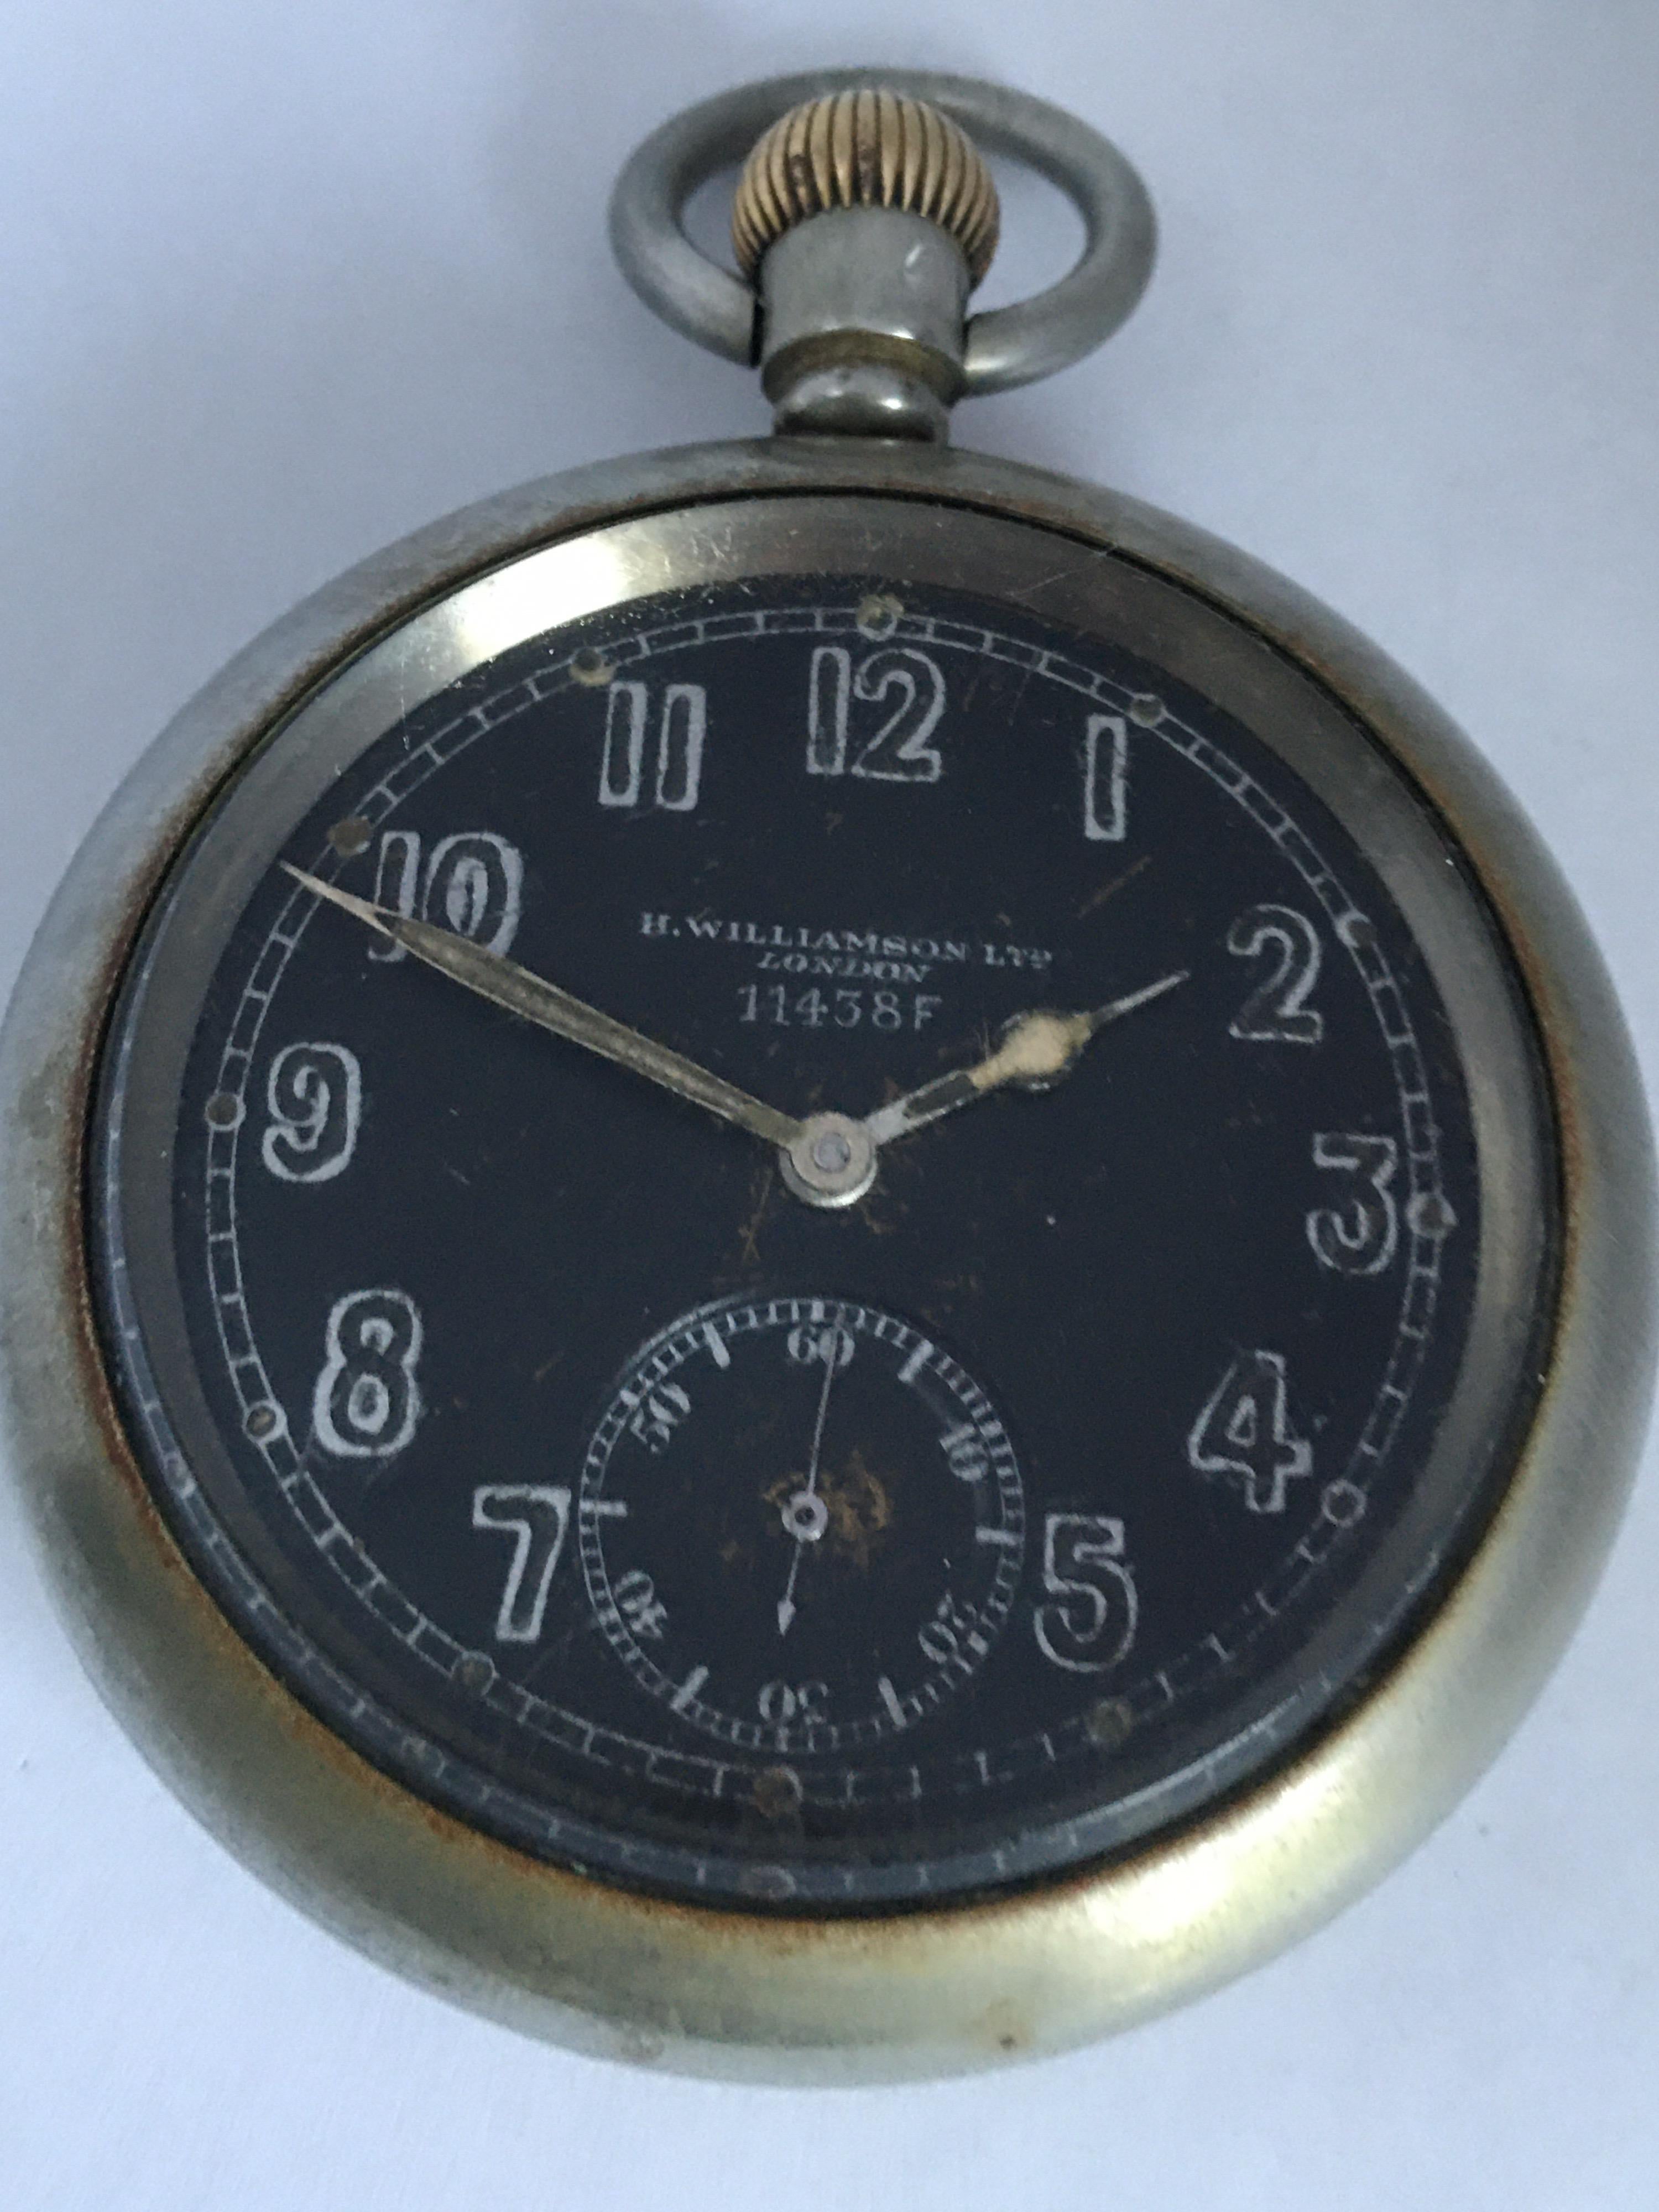 Antique WW1 Pocket Watch, H. Williamson Ltd London 11438F 5